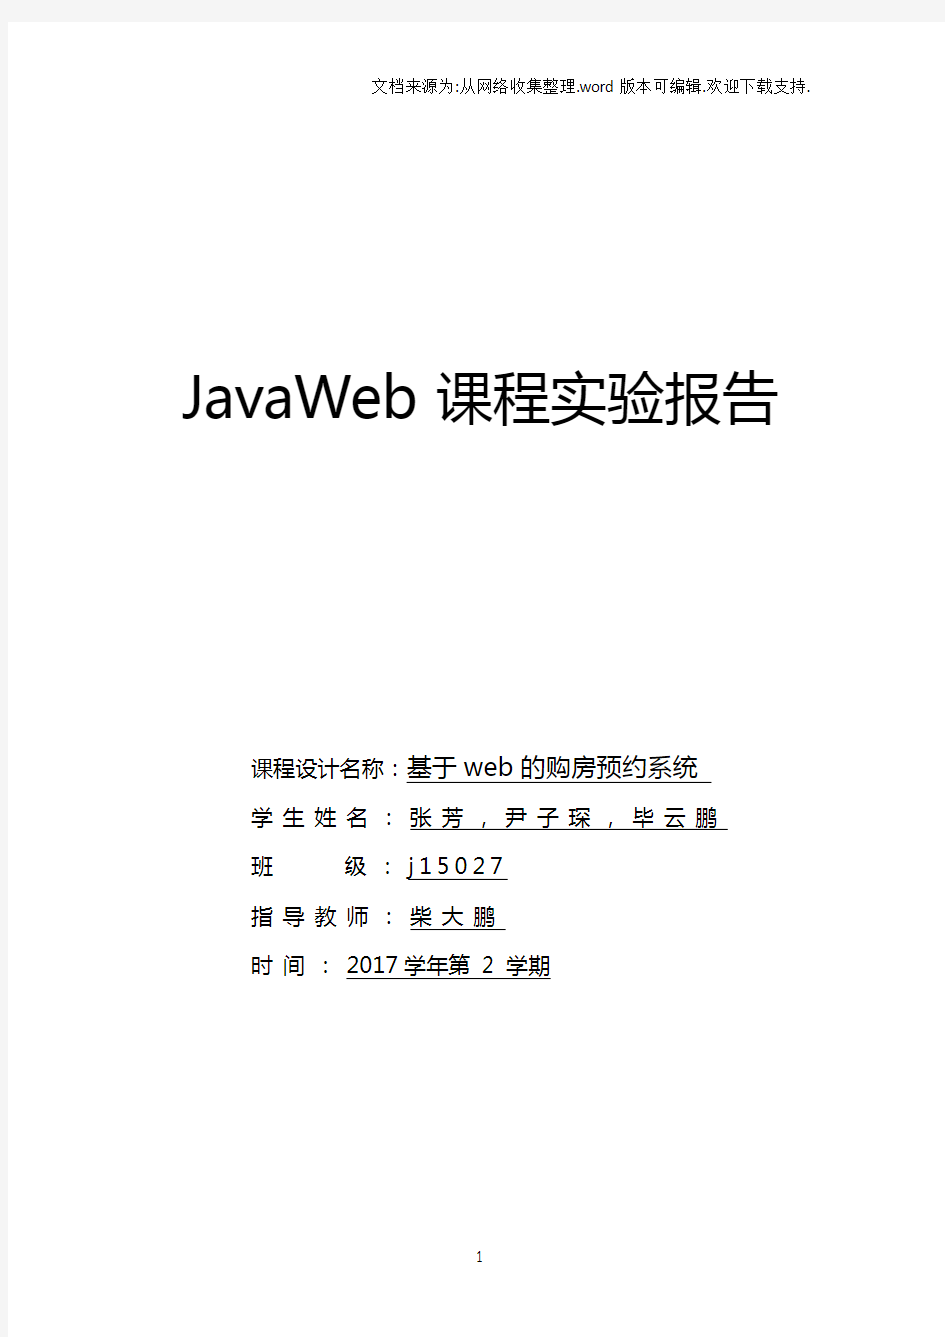 javaweb课程实验报告模板